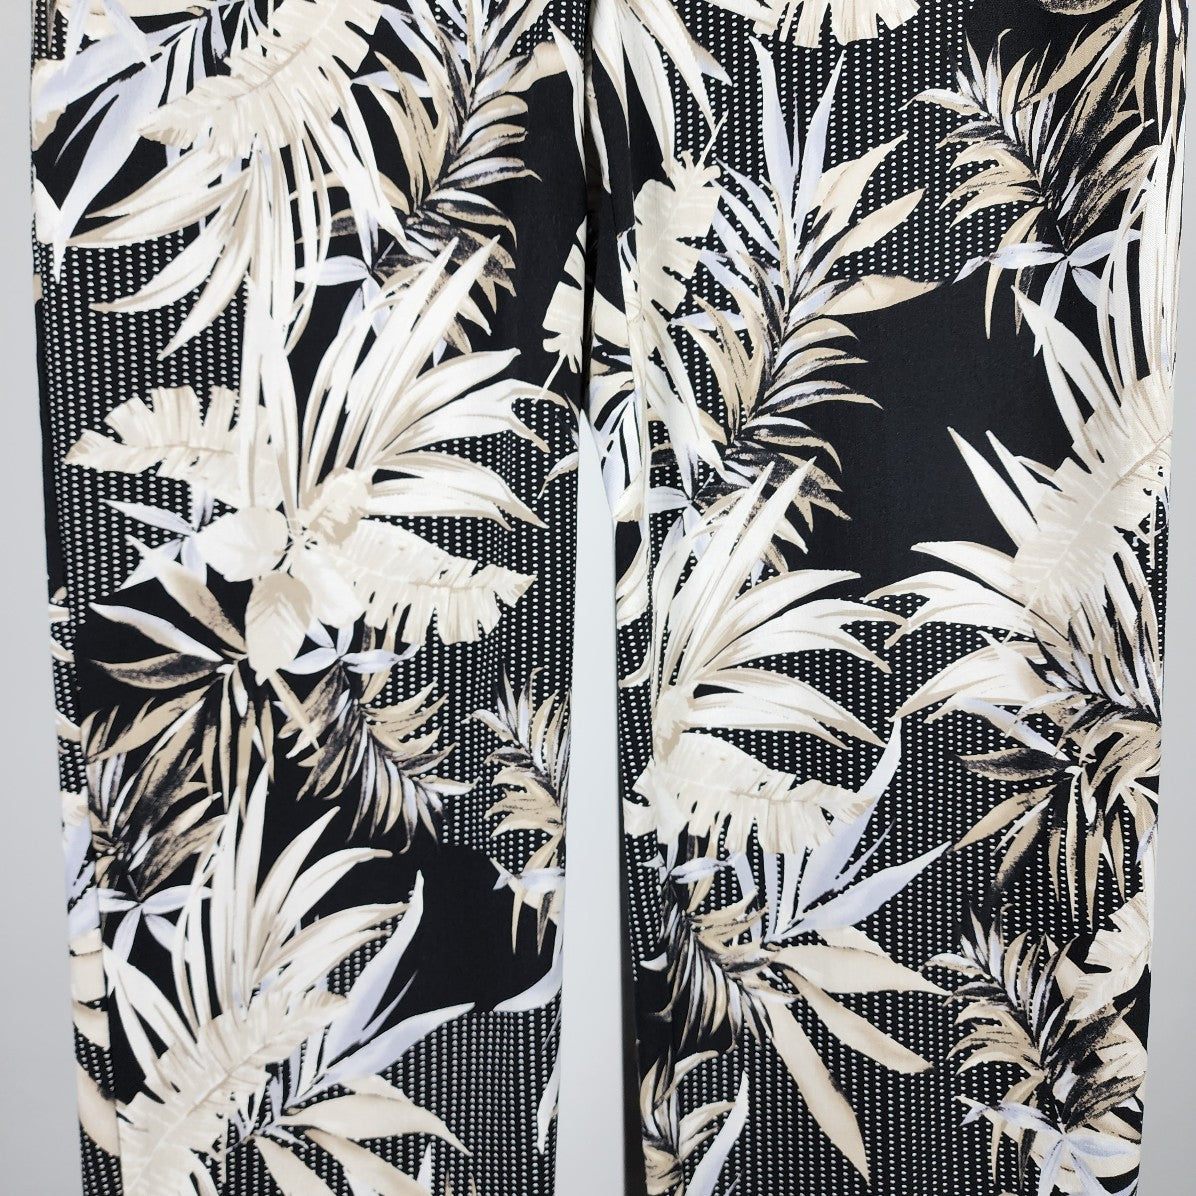 Frank Lyman Black Tropical Printed Skinny Pants Size M